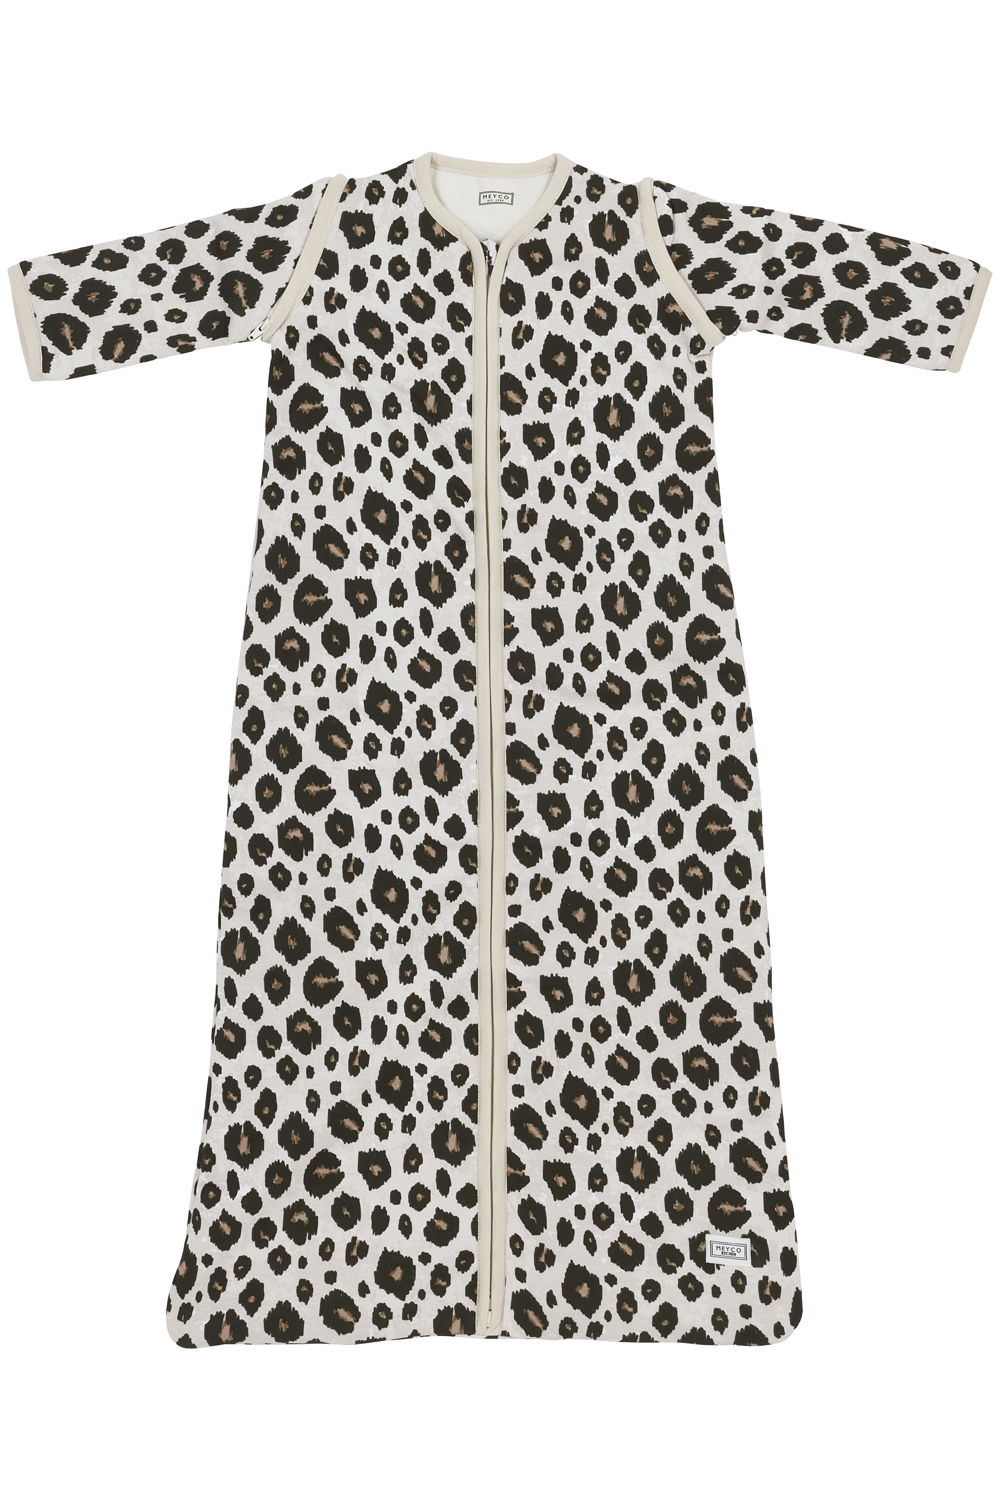 Baby Sleeping bag detachable sleeve lined Leopard - Sand Melange - 110cm